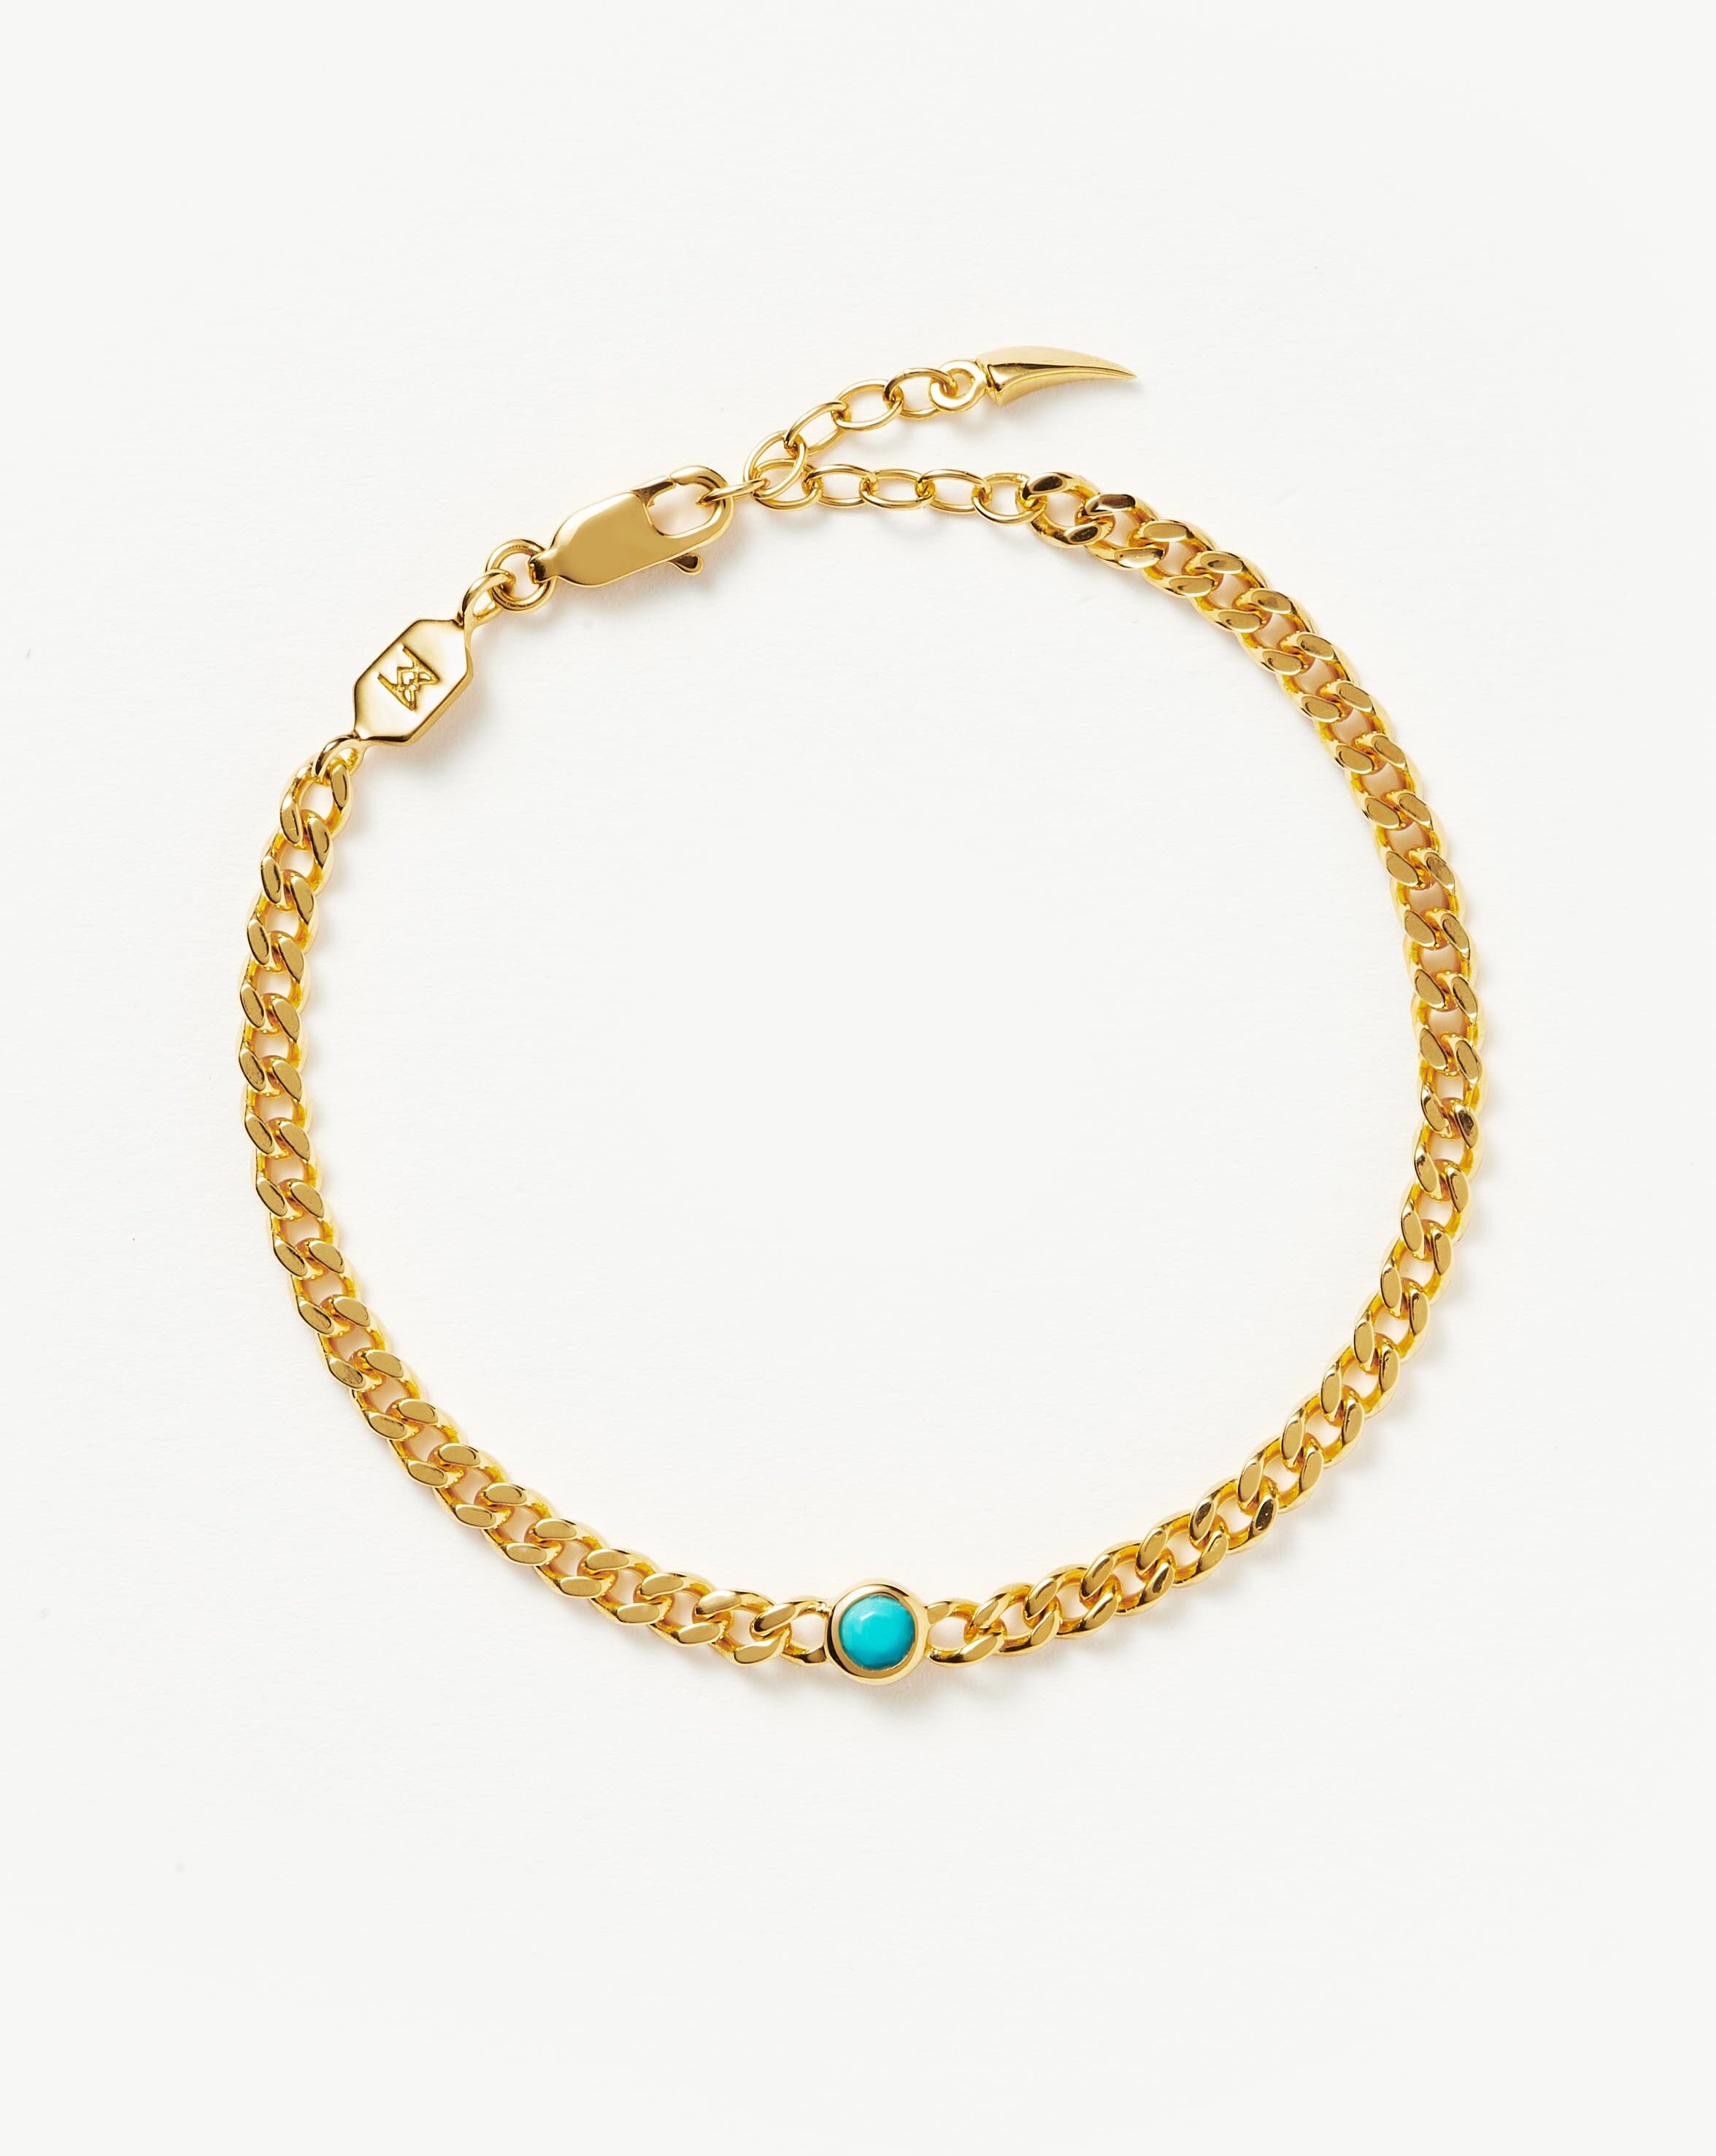 Birthstone Chain Bracelet - December | 18ct Gold Plated Vermeil/Turquo ...